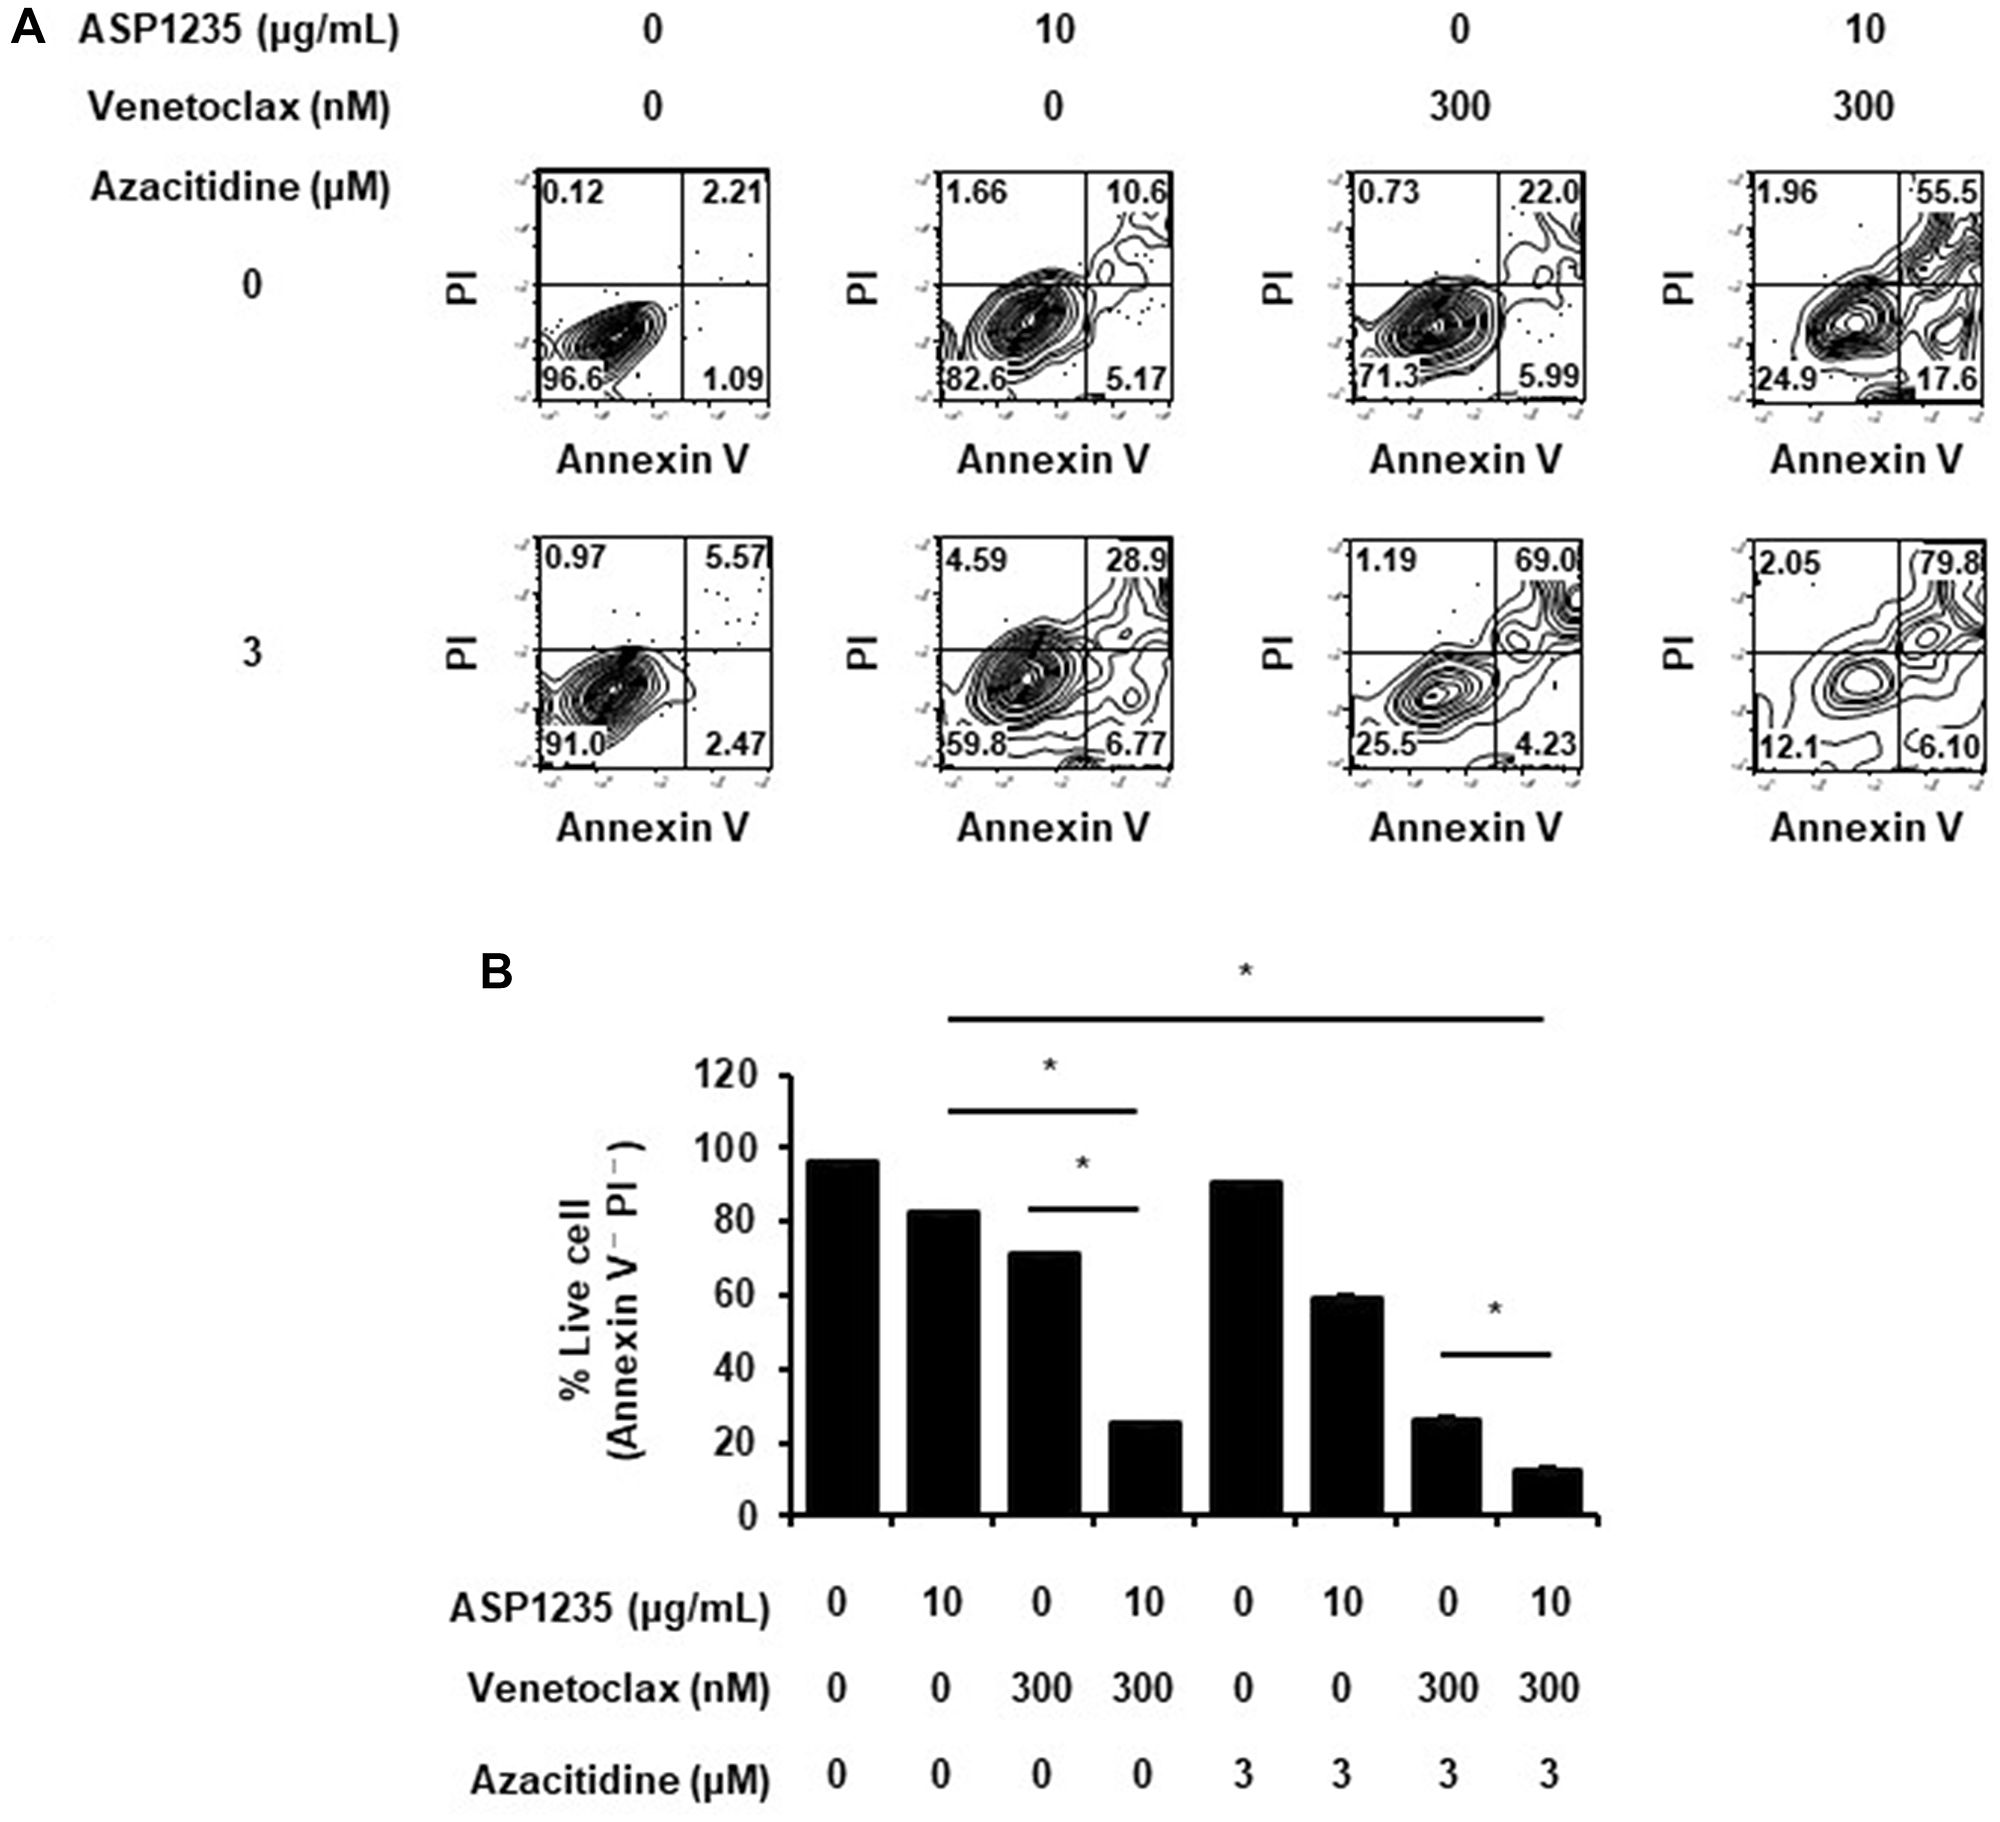 ASP1235 showed enhanced cytotoxic effect with venetoclax or venetoclax plus azacitidine in vitro.